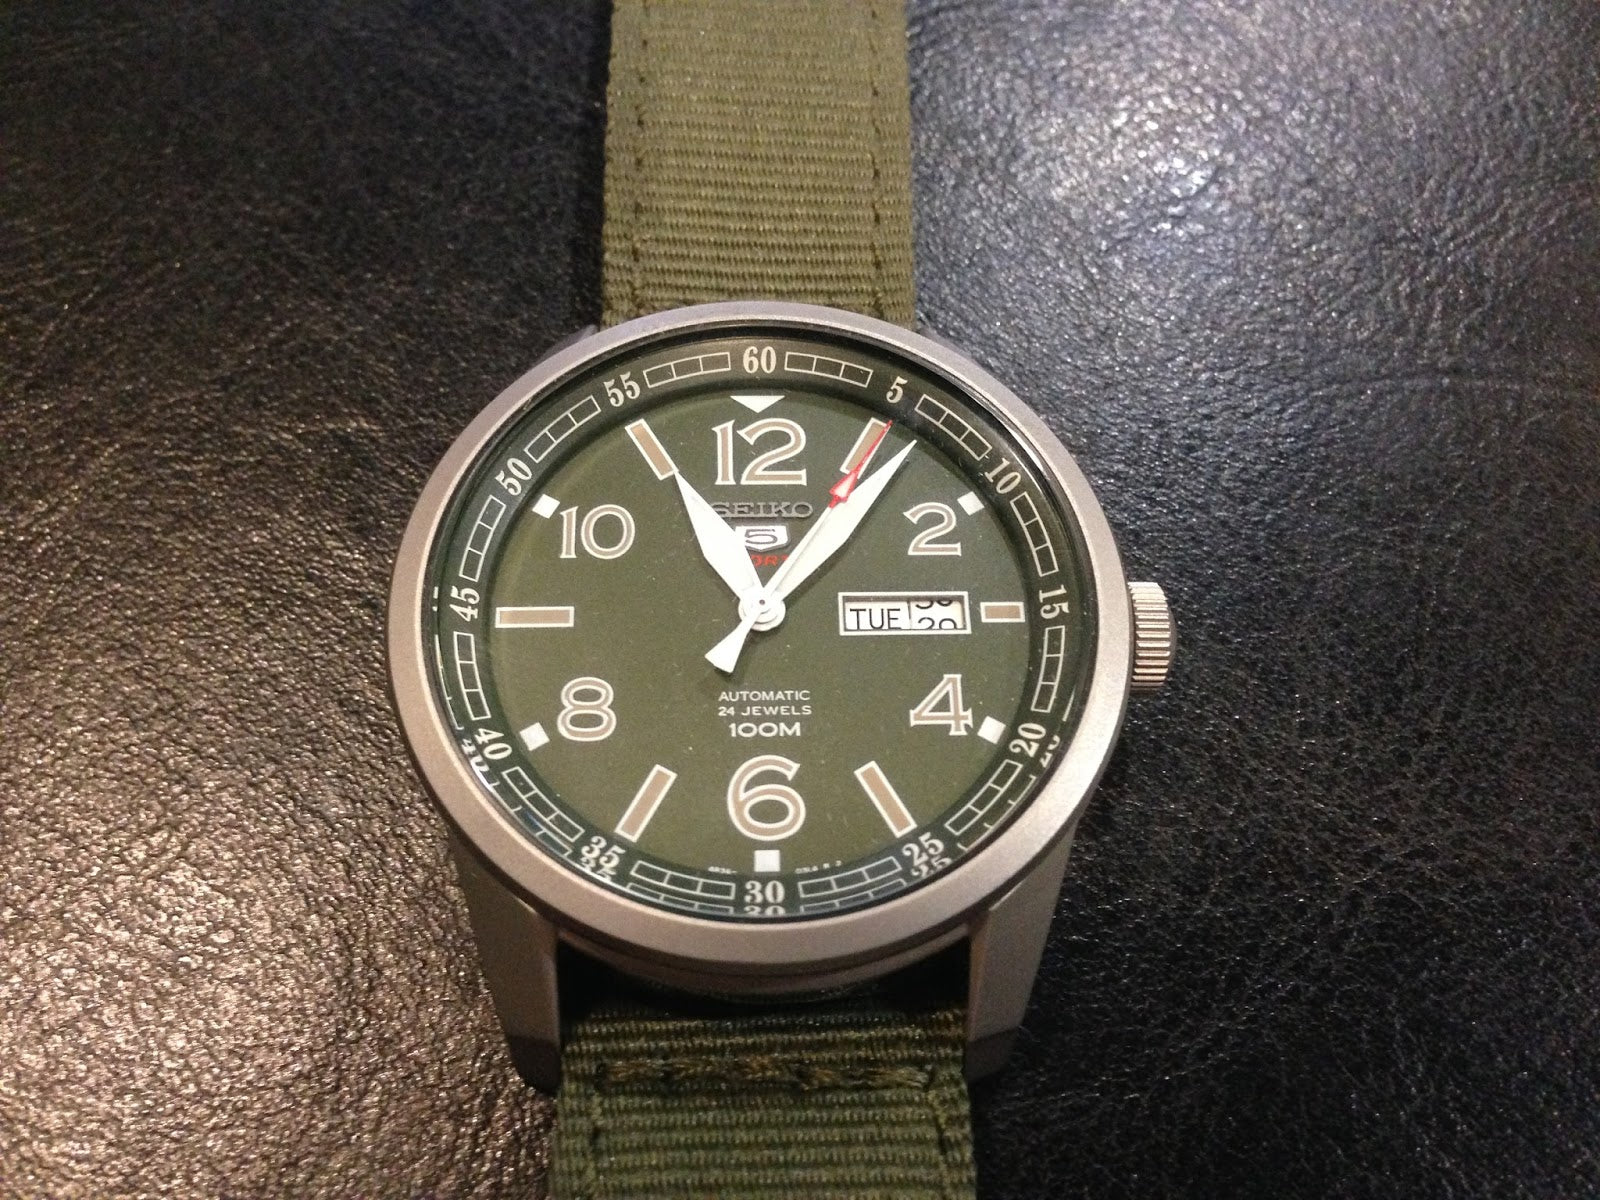 Seiko 5 Sports Military 100M Automatic Men's Watch Green Nylon Strap SRP621K1